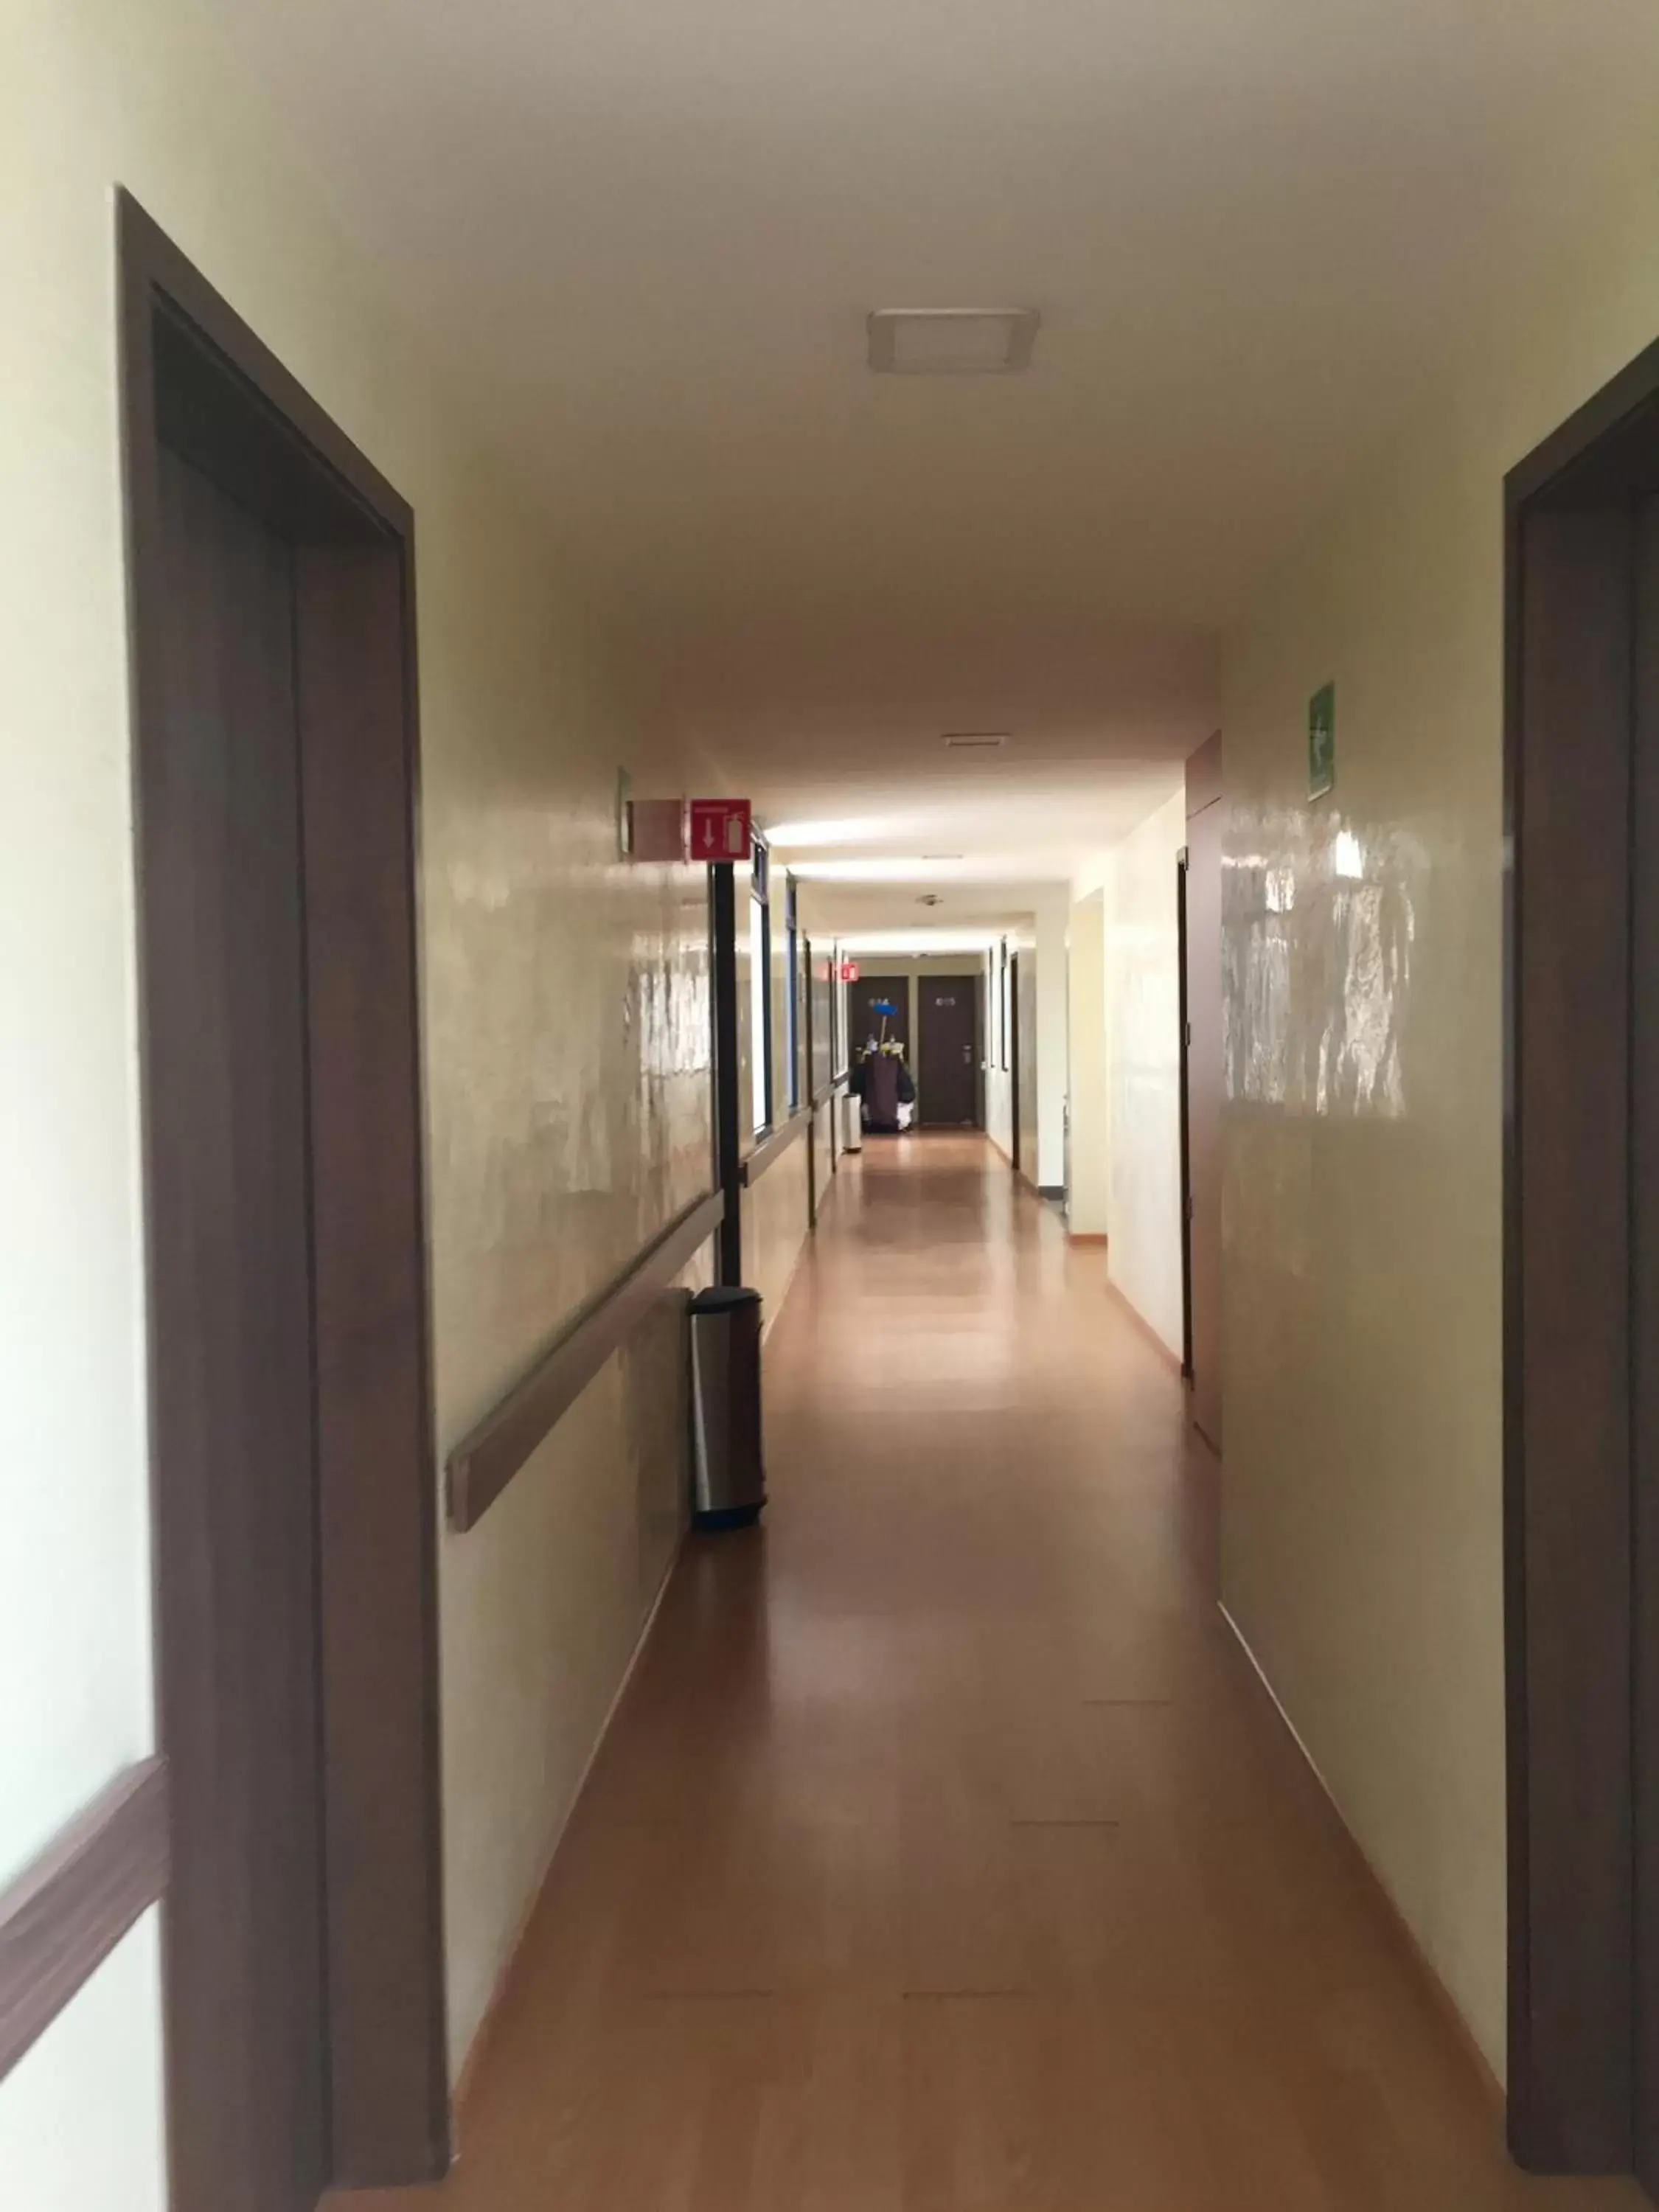 Area and facilities in Hotel Castropol